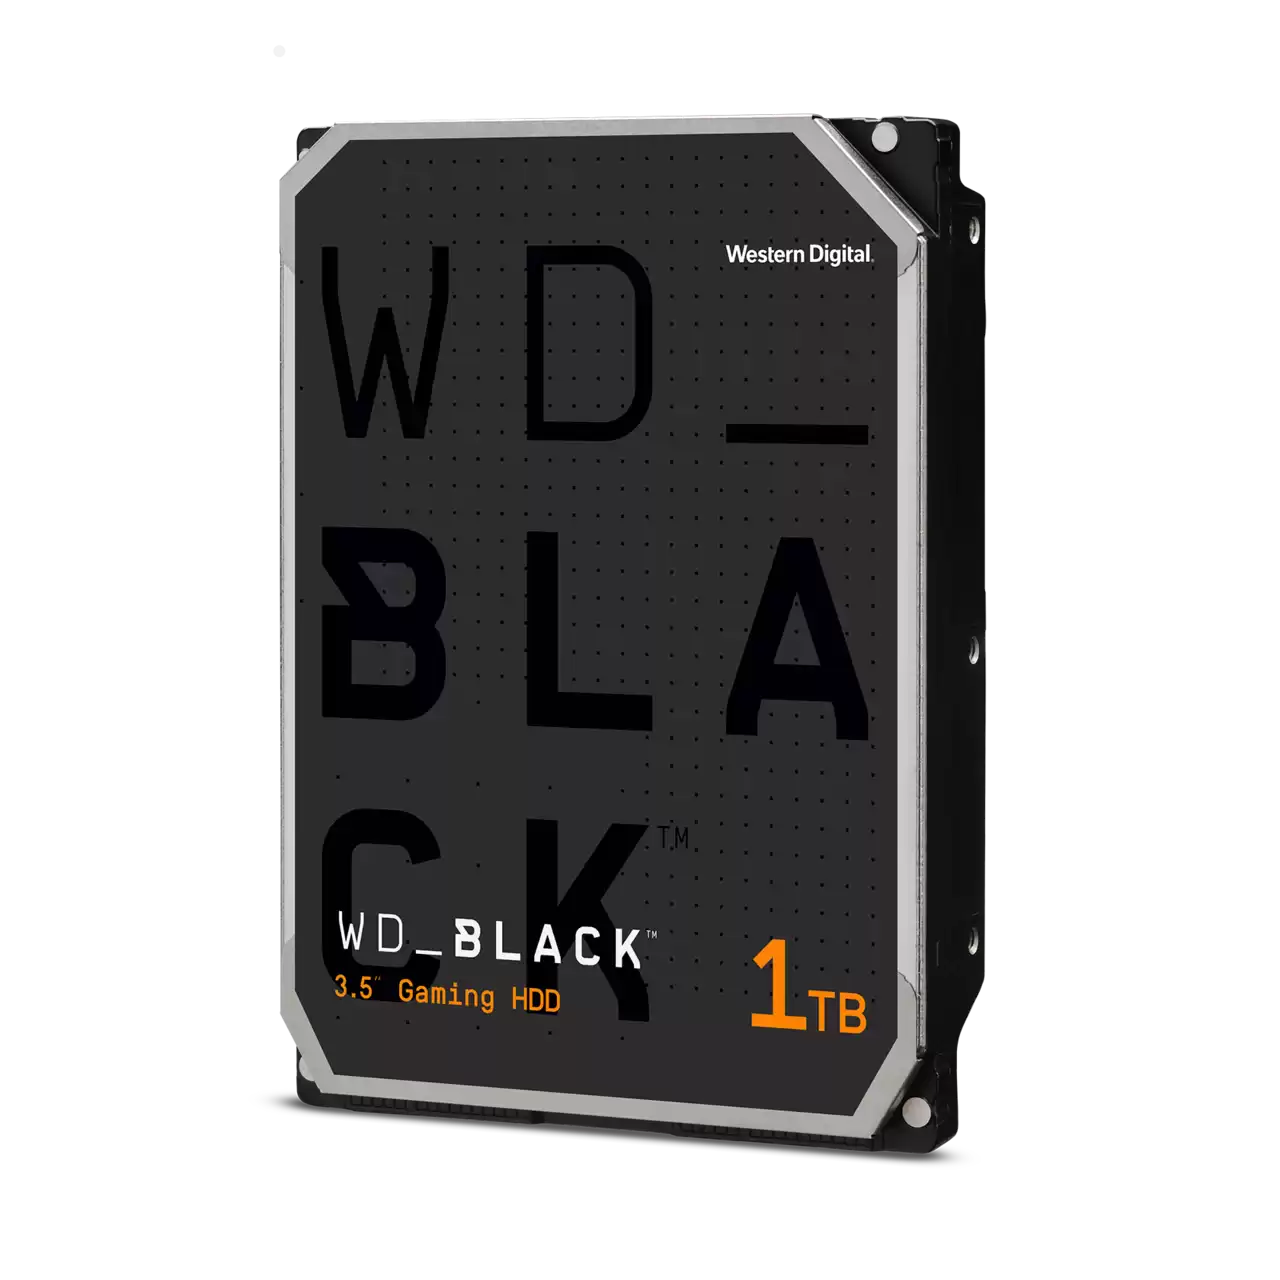 WD_BLACK 3.5-Inch Gaming Hard Drive - 1TB - 3.5 SATA - WD1003FZEX